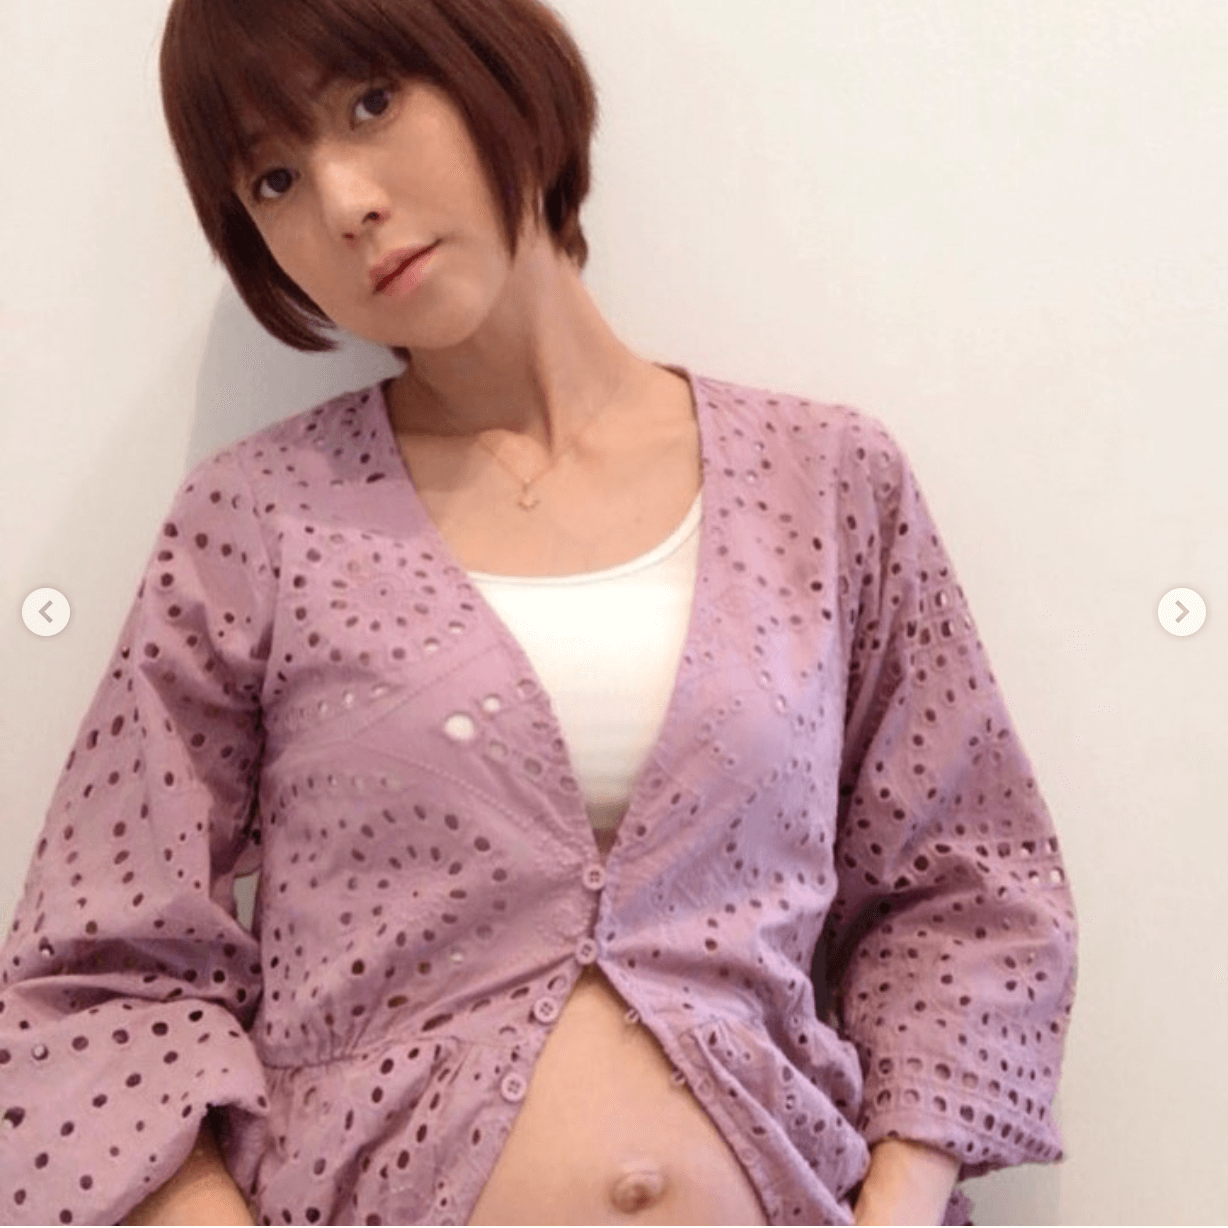 hitomi、妊娠8か月のセルフマタニティフォト公開に「キレイなお腹」「大きくなりましたね」の声サムネイル画像!